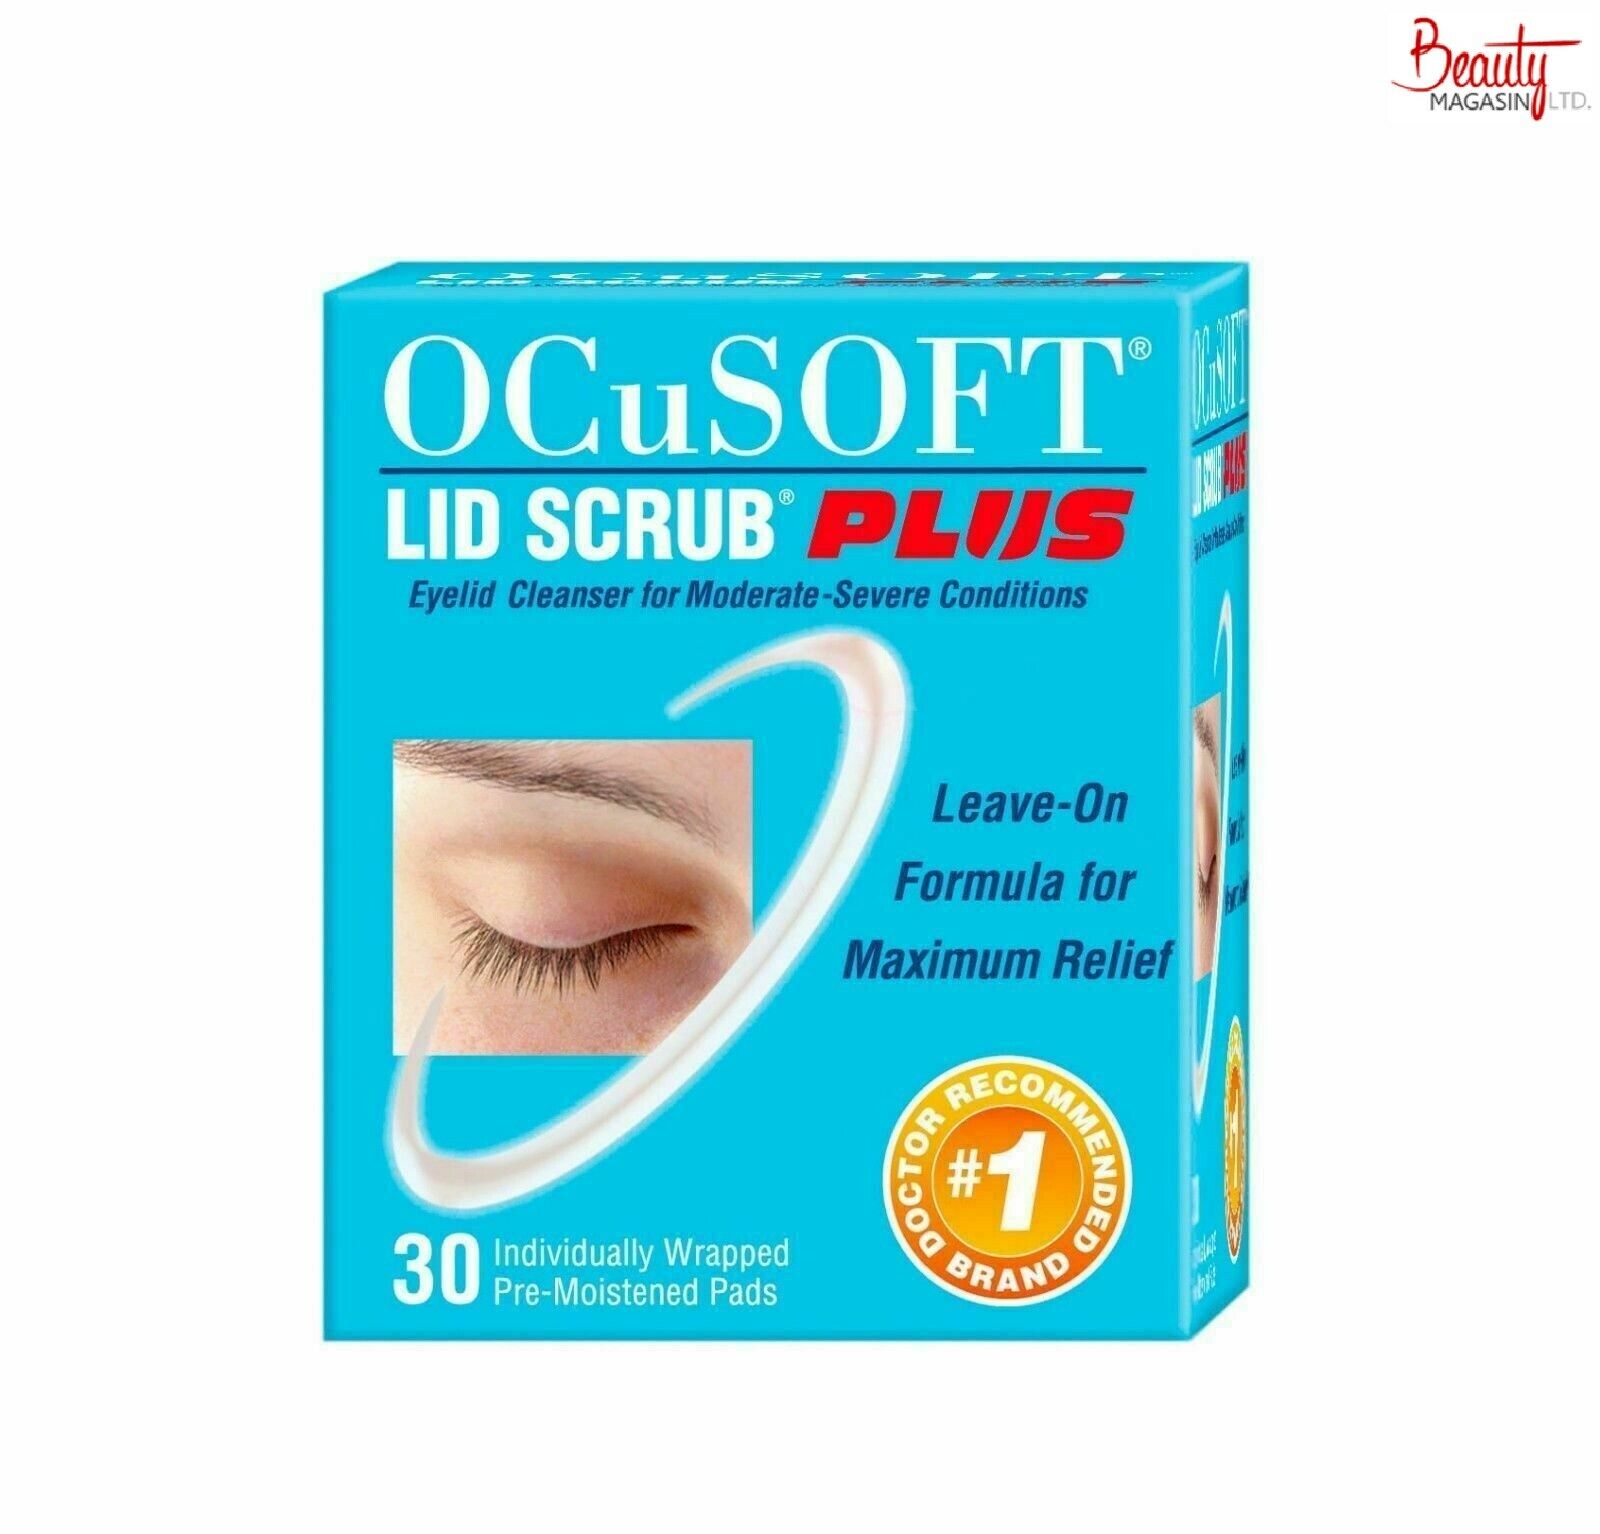 Ocusoft Lid Scrub Plus Pre-moistened Pads 30-ct (exp. 06/2023)